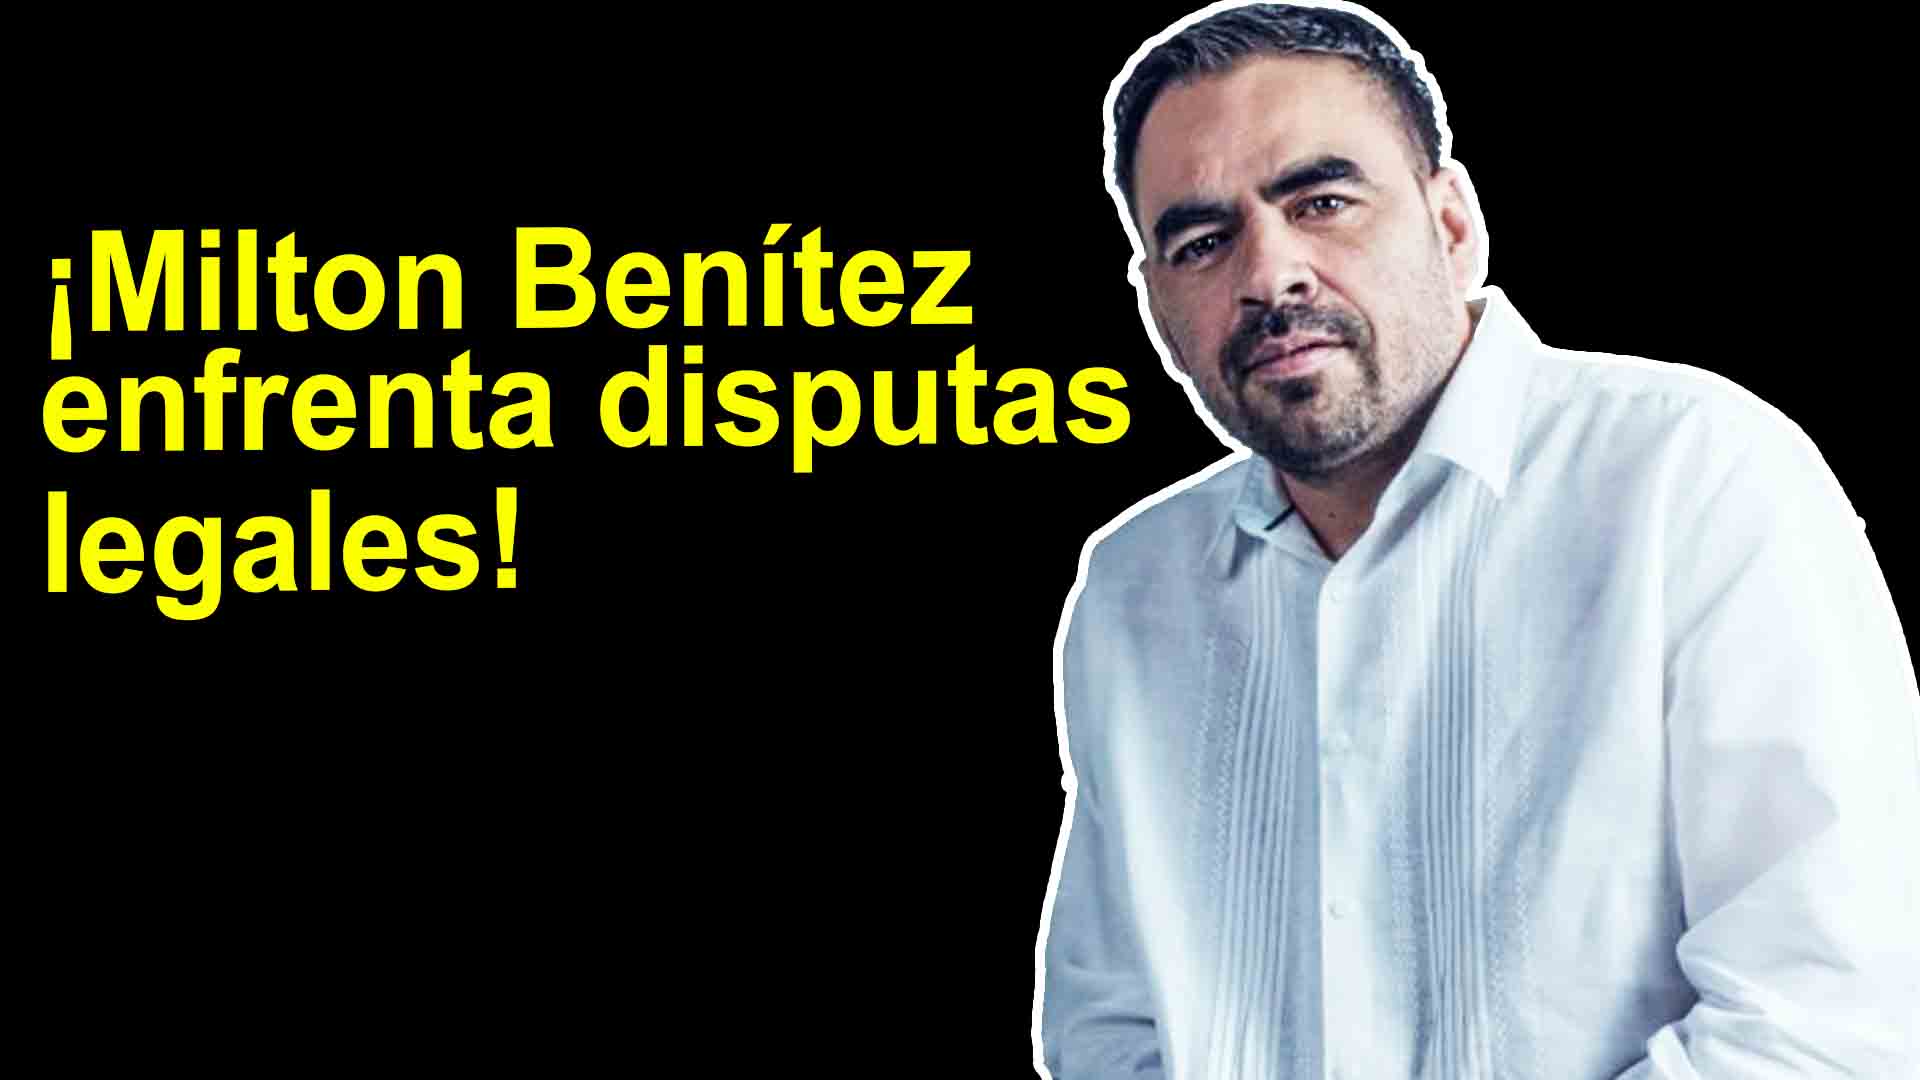 Milton Benitez enfrenta disputa legales